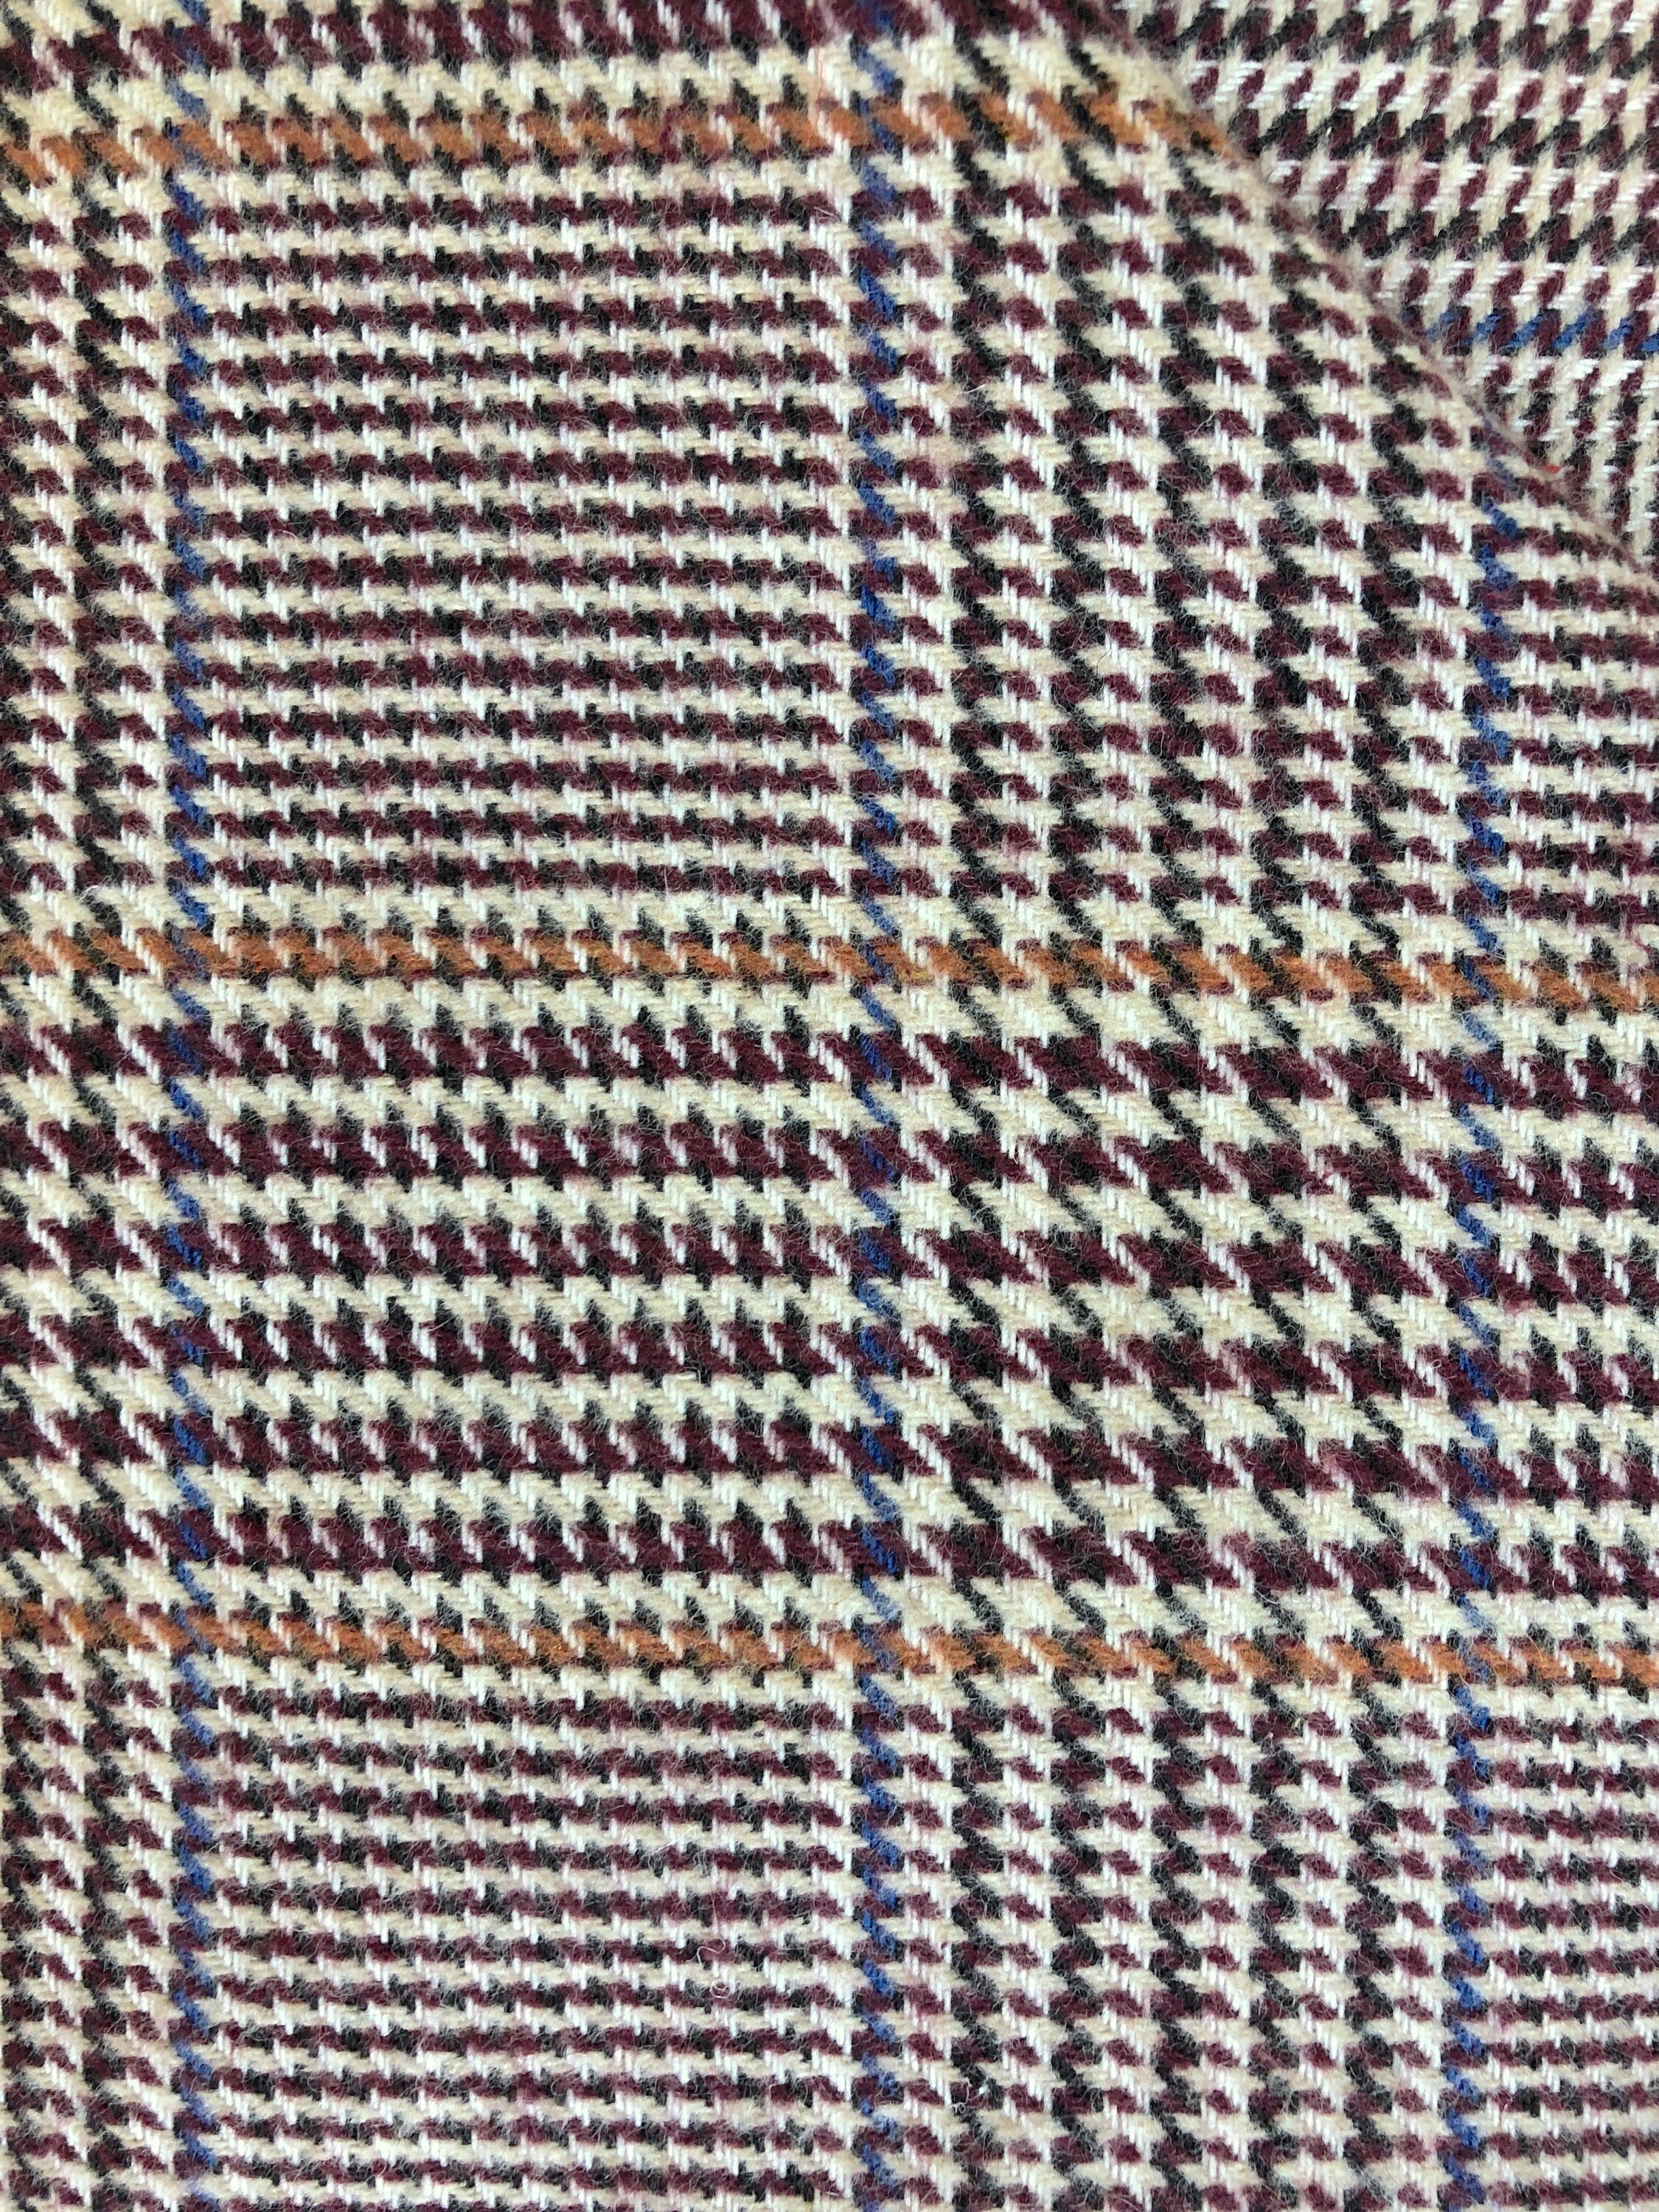 Prince Nolan Designer Imported Italian Wool Plaid Tartan Woven Brown Fabric  by the yard